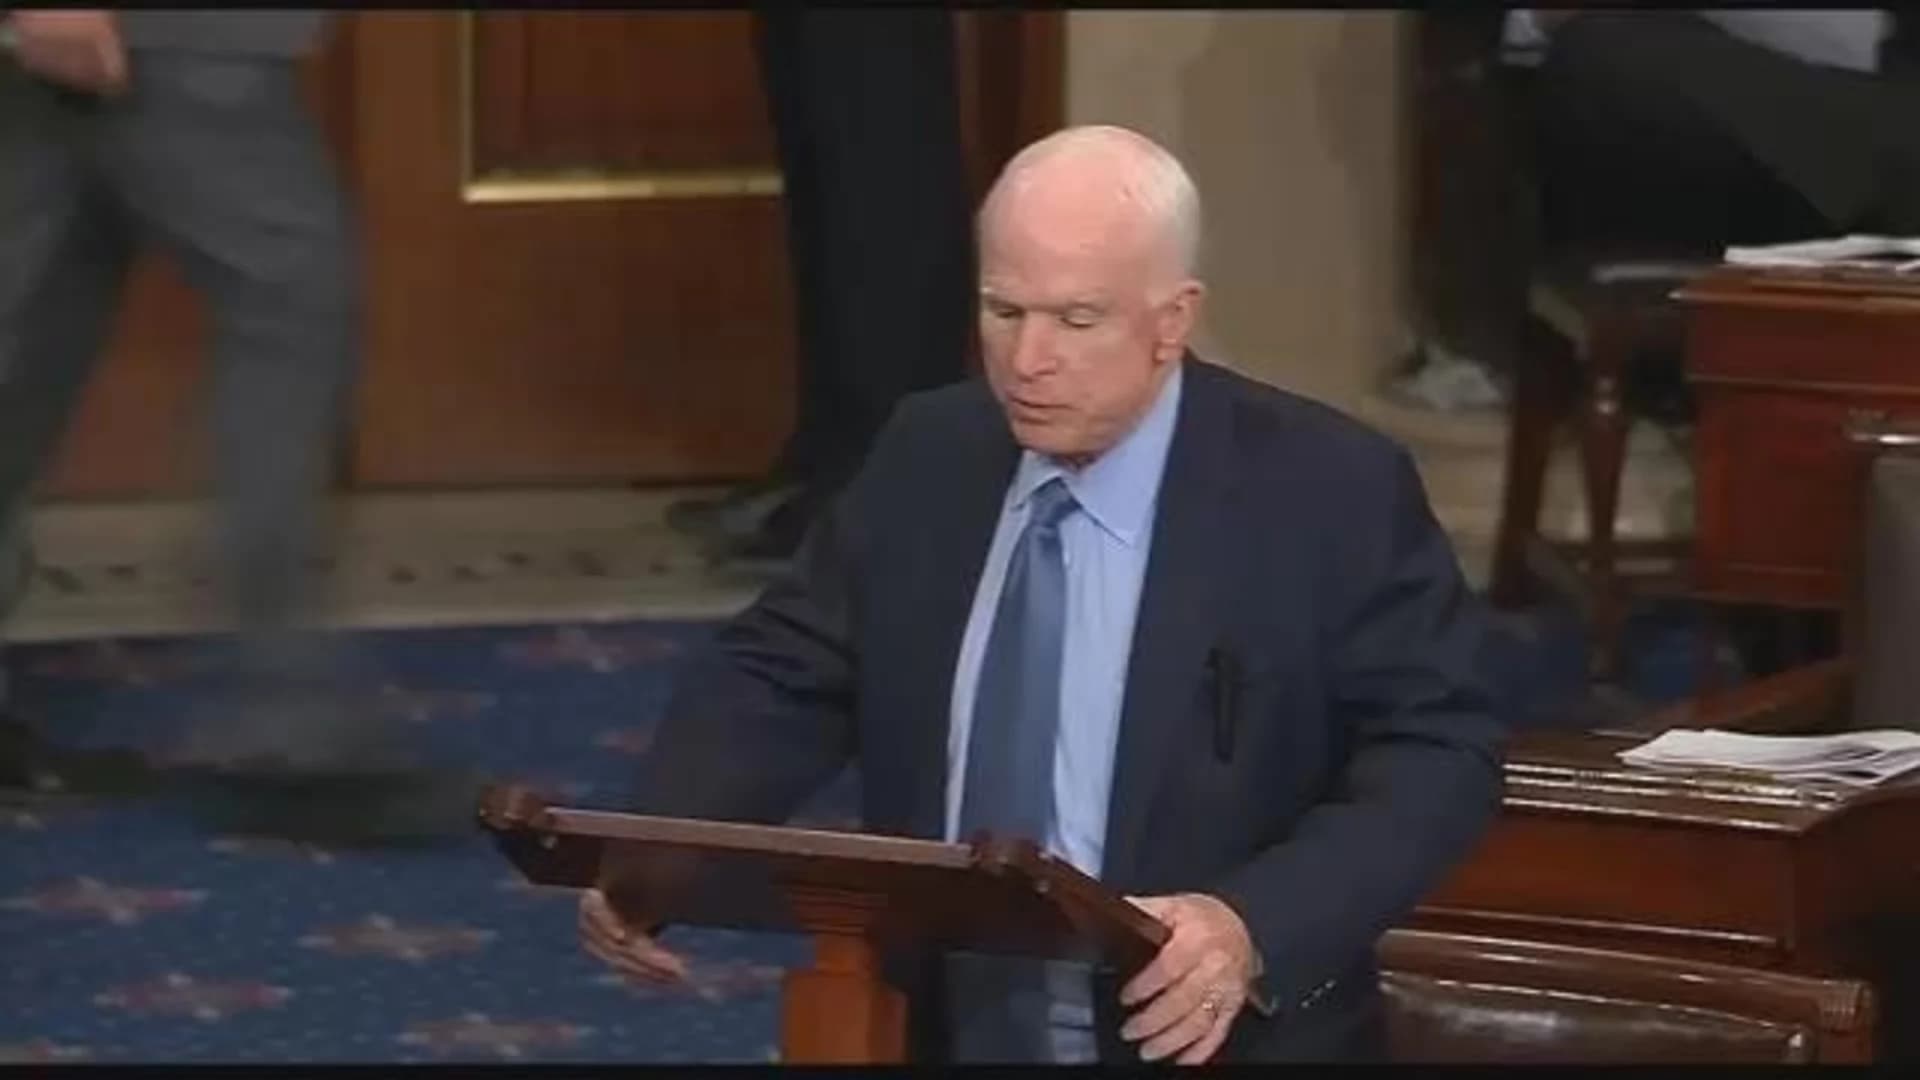 War hero and presidential candidate John McCain has died